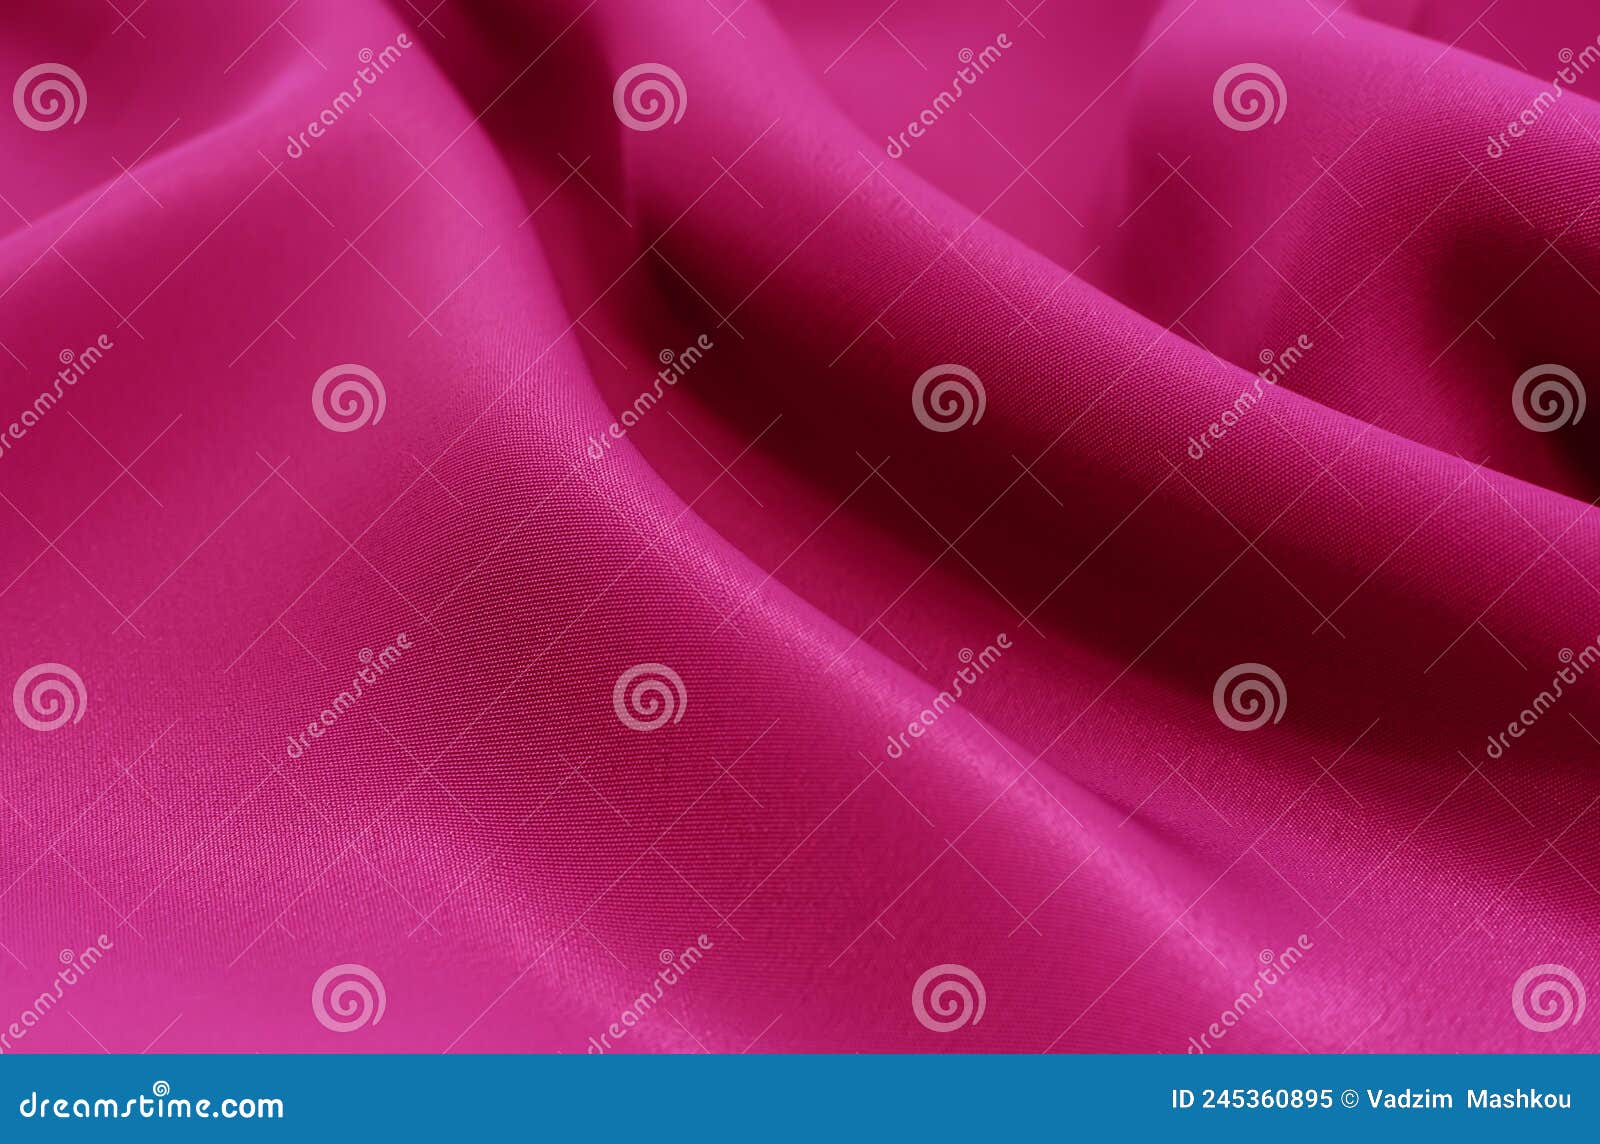 Fondo de textura de tela roja patrón arrugado de seda o lino